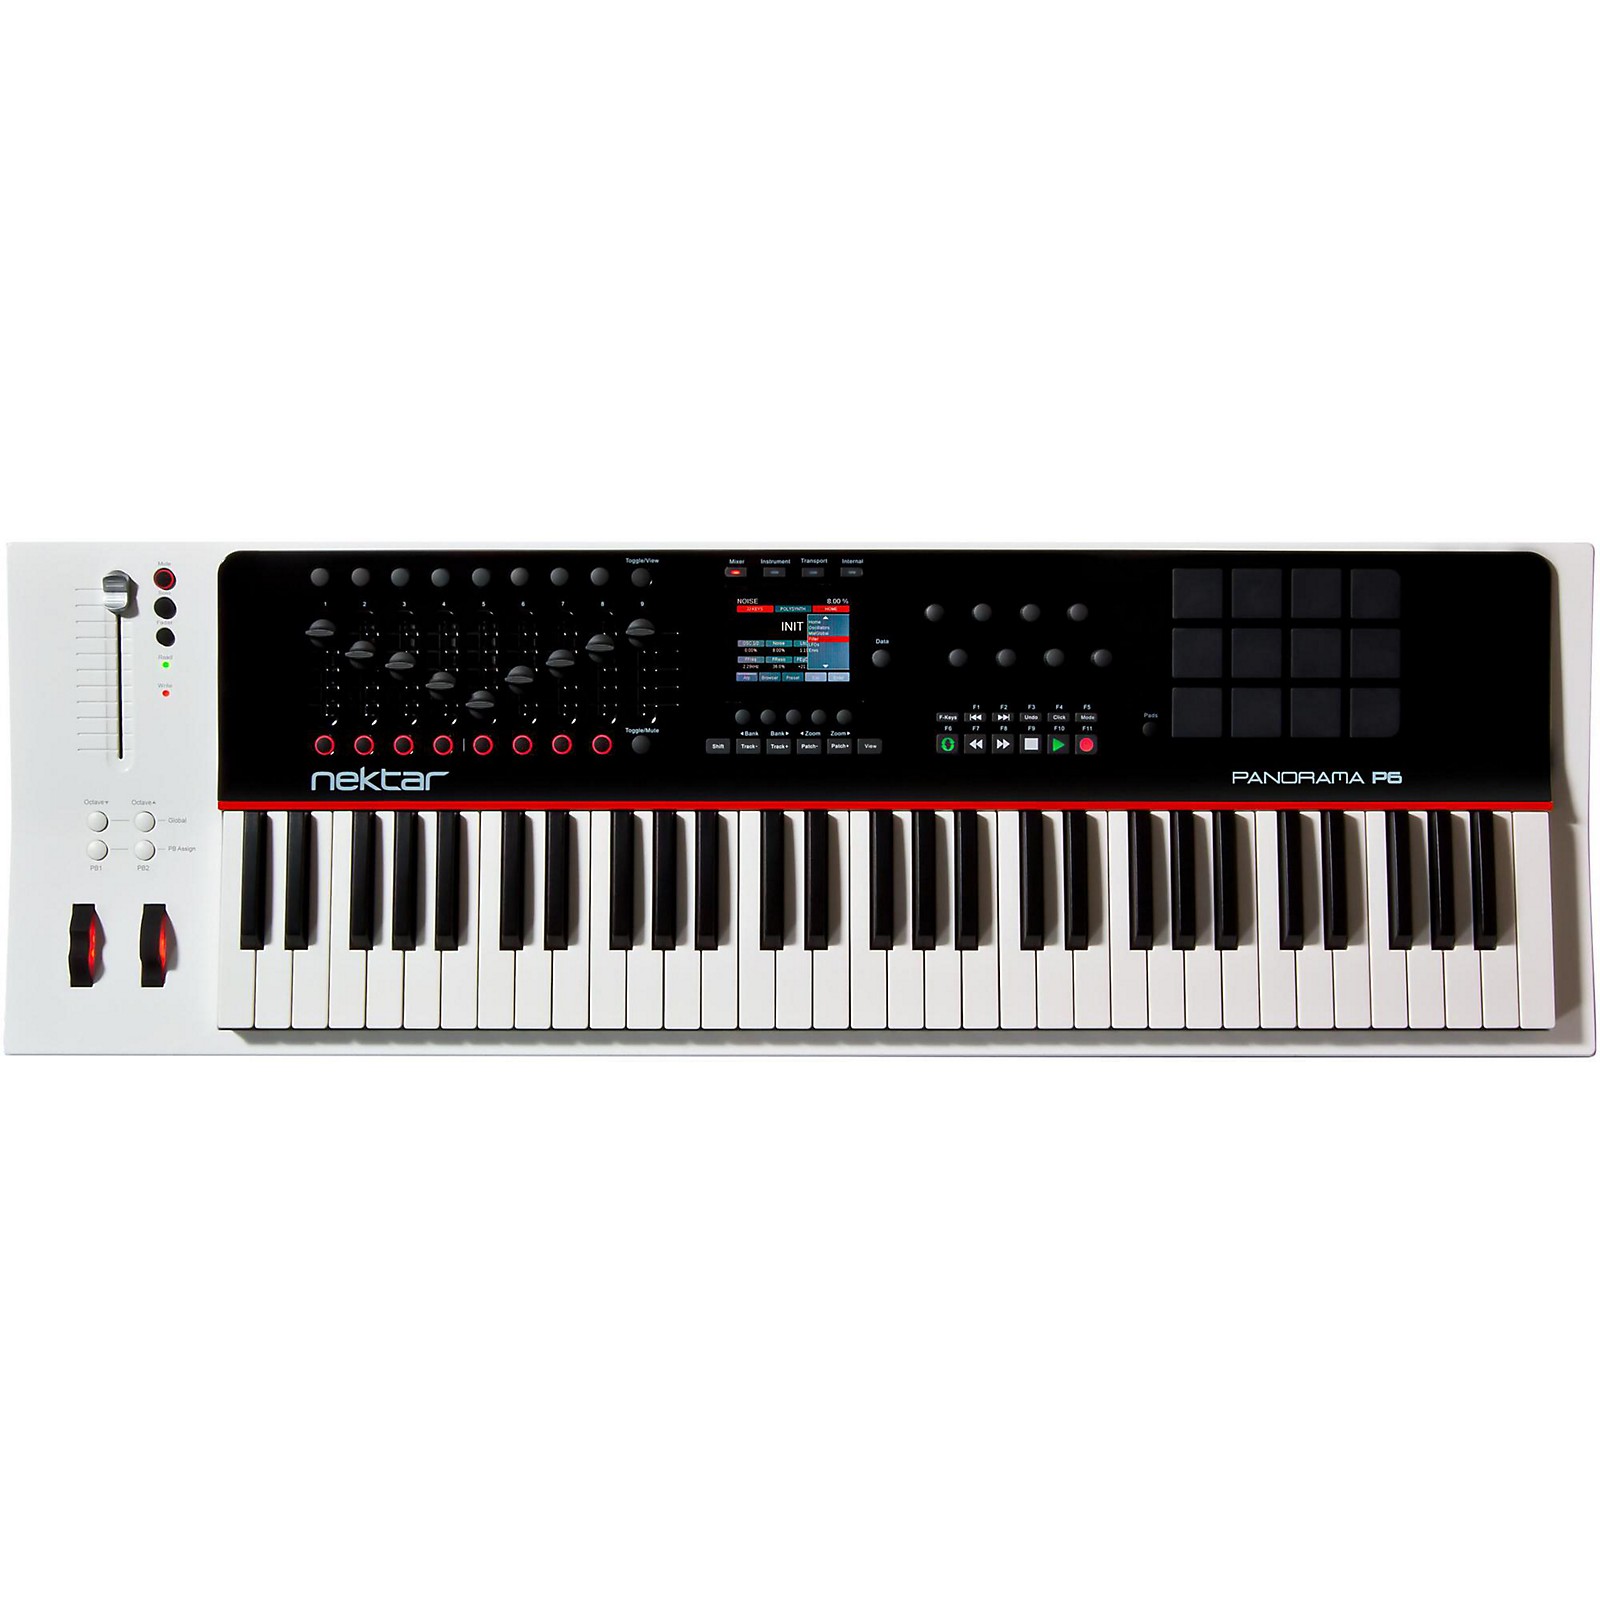 Nektar Panorama P6 61-Key USB MIDI Controller Keyboard | Guitar 